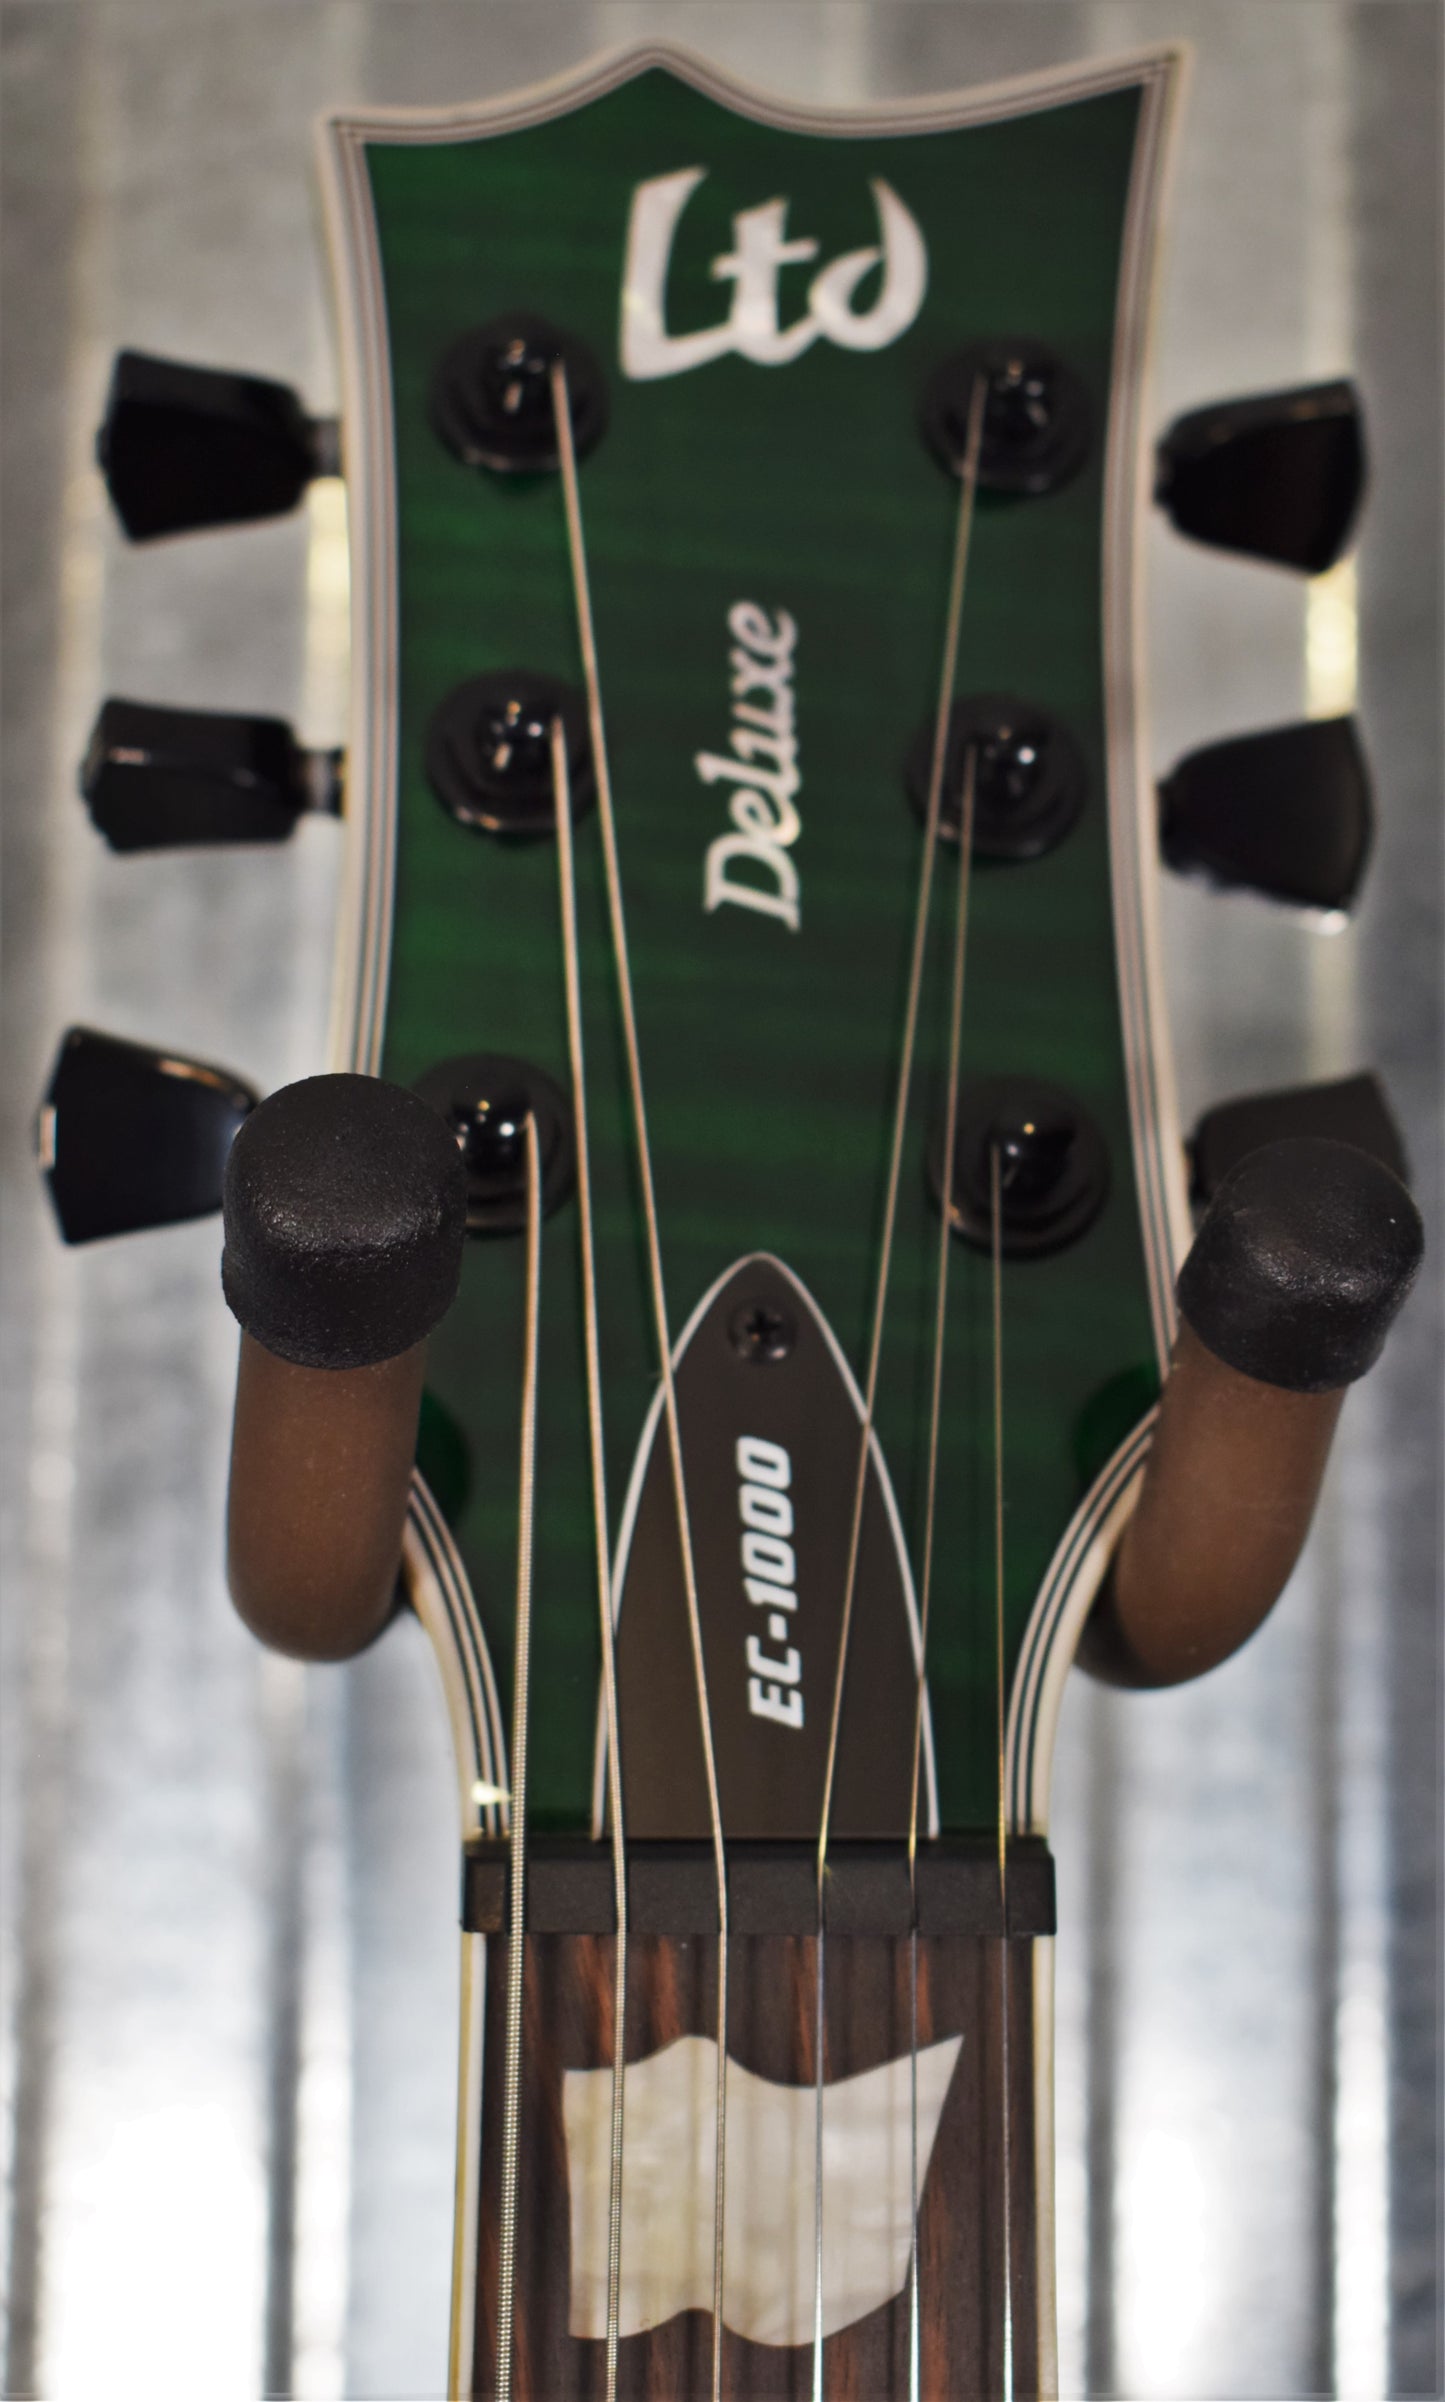 ESP LTD EC-1000 Flame See Thru Green Seymour Duncan Guitar LEC1000FMSTG #0944